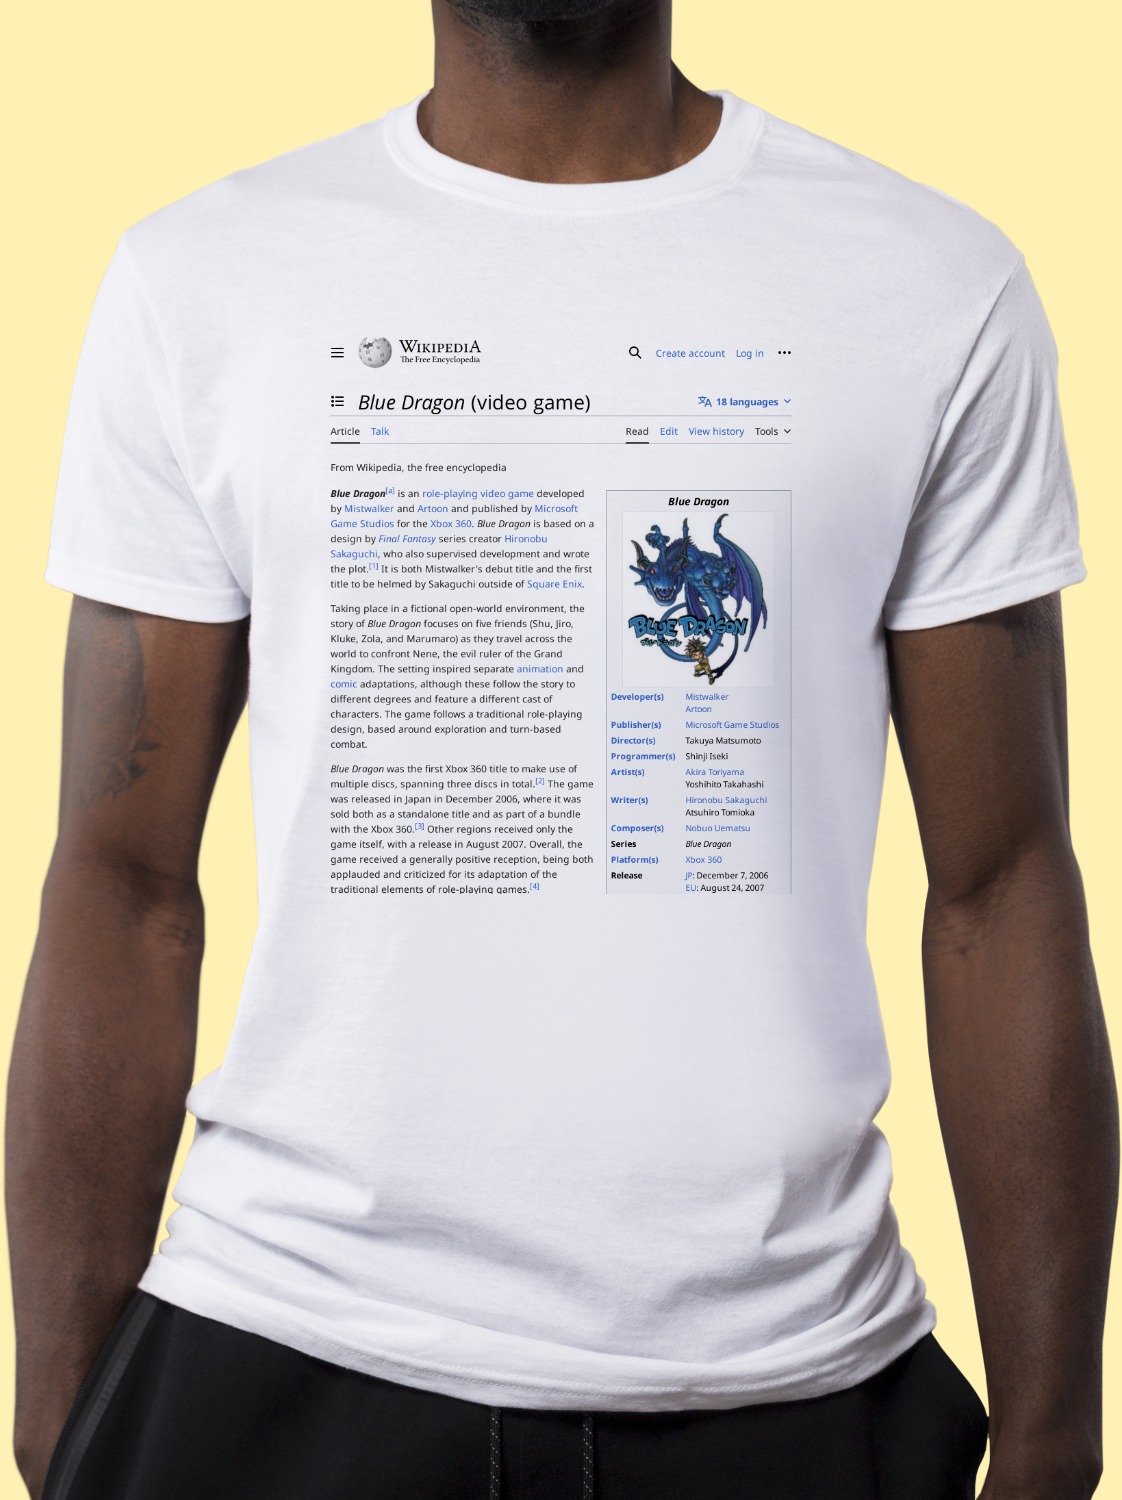 Blue_Dragon_(video_game) Wikipedia Shirt